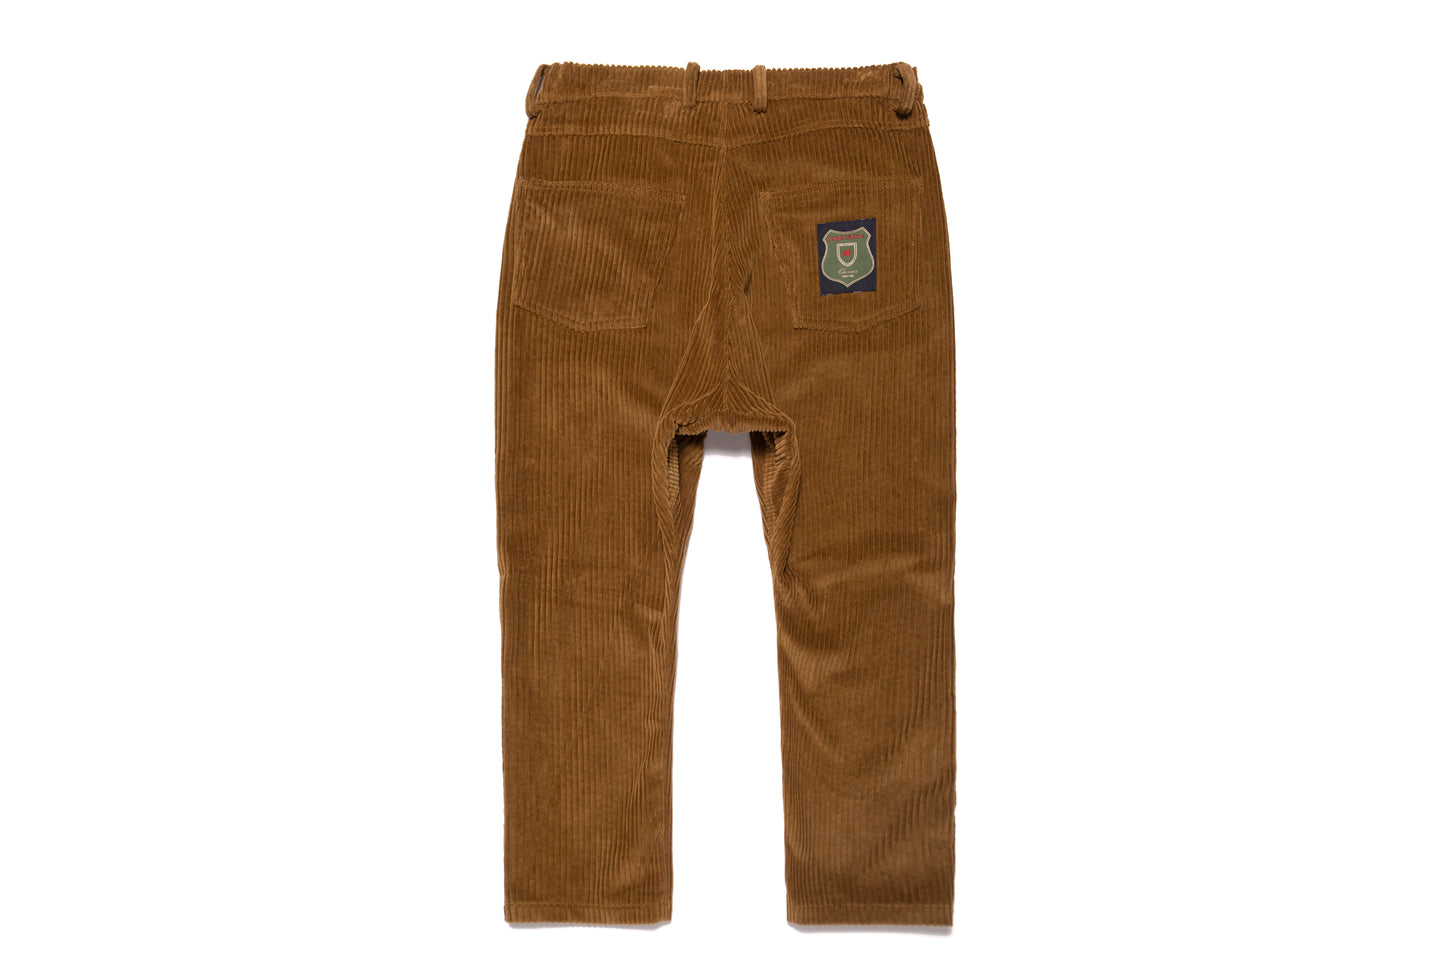 John Canoe Corduroy 5 Pocket Pants Khaki